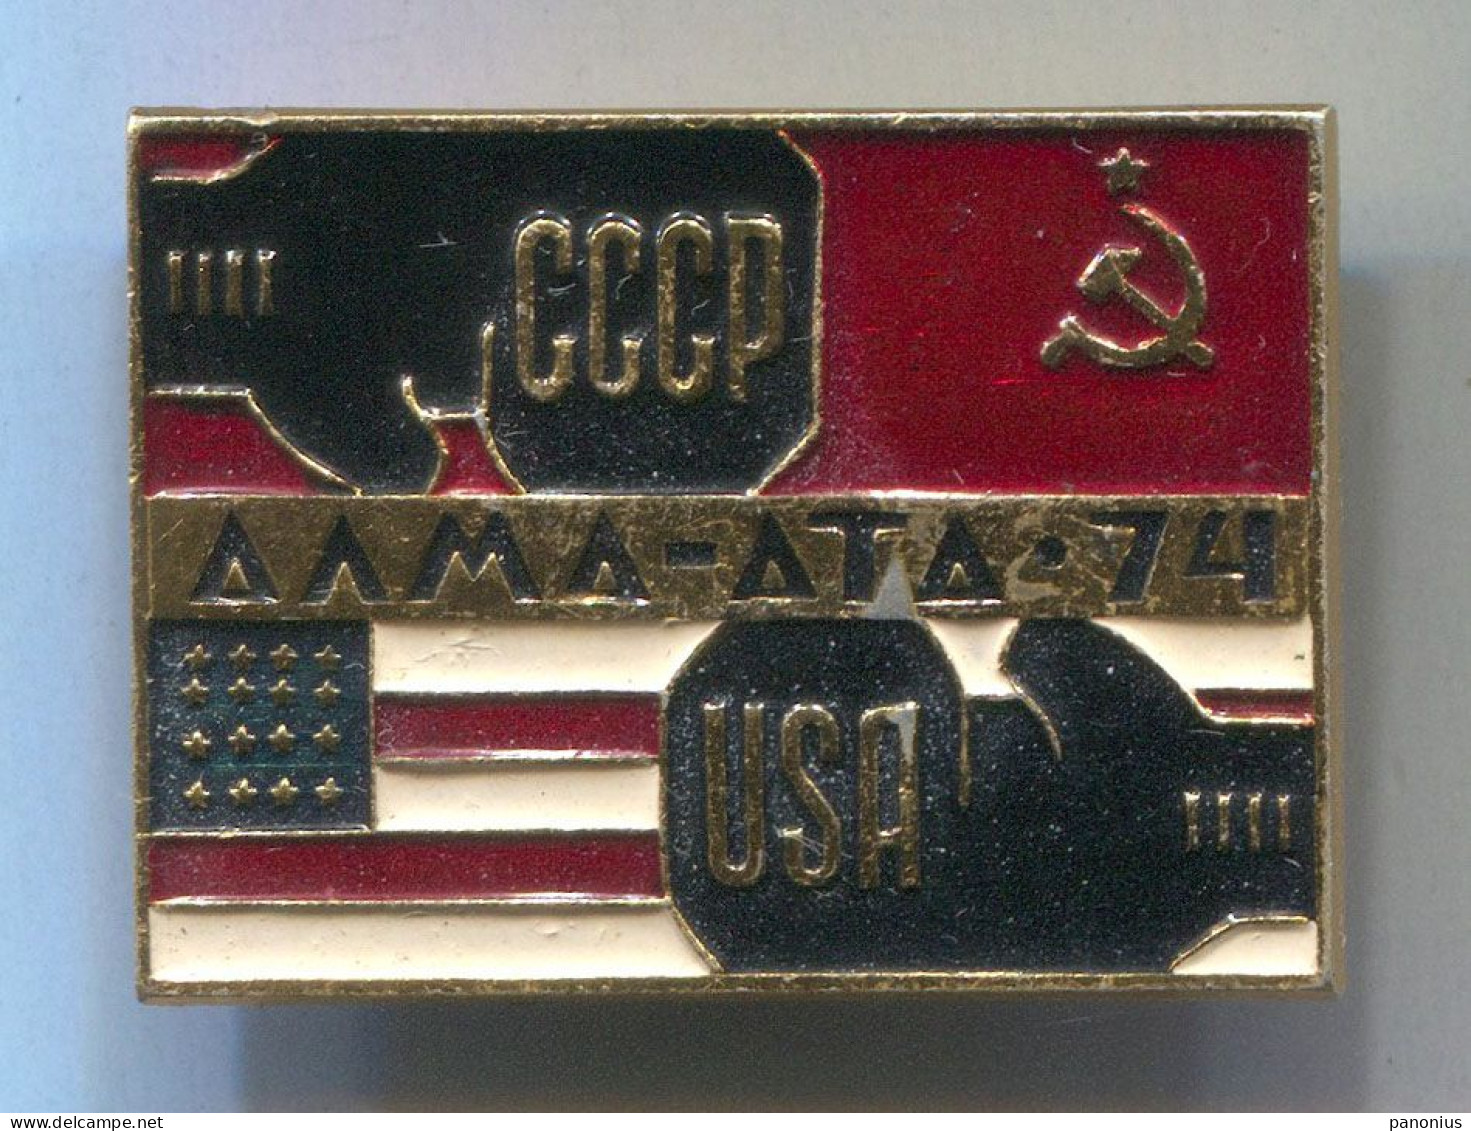 Boxing Box Boxen Pugilato - Alma - Ata Kazakhstan 1974. USSR Russia Vs USA, Vintage  Pin  Badge  Abzeichen - Boxeo